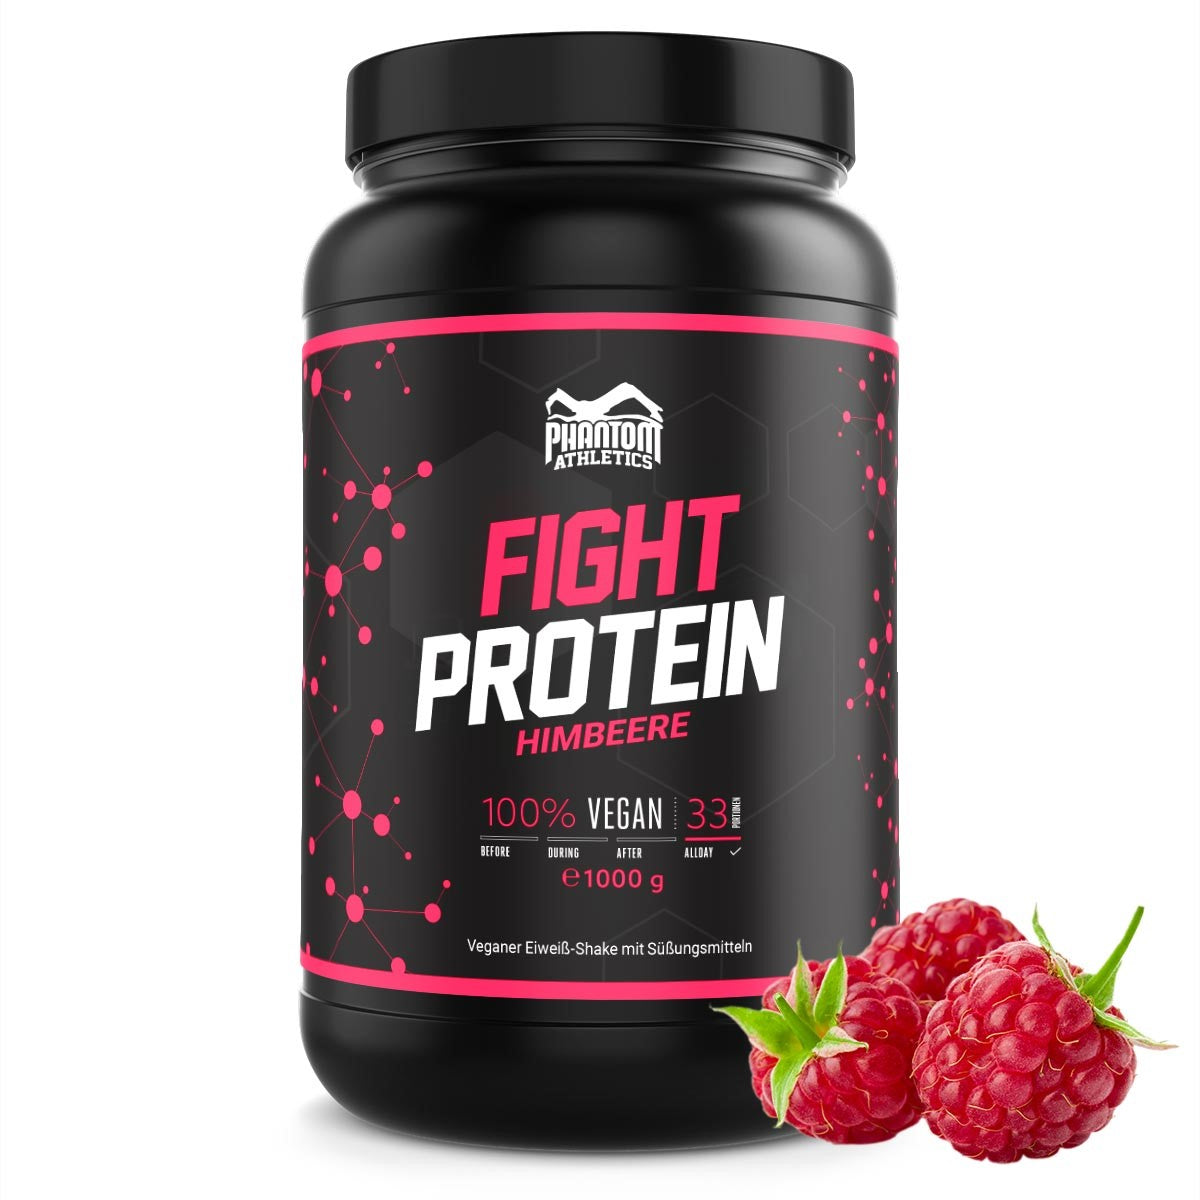 Fight protein - malina - 1000g